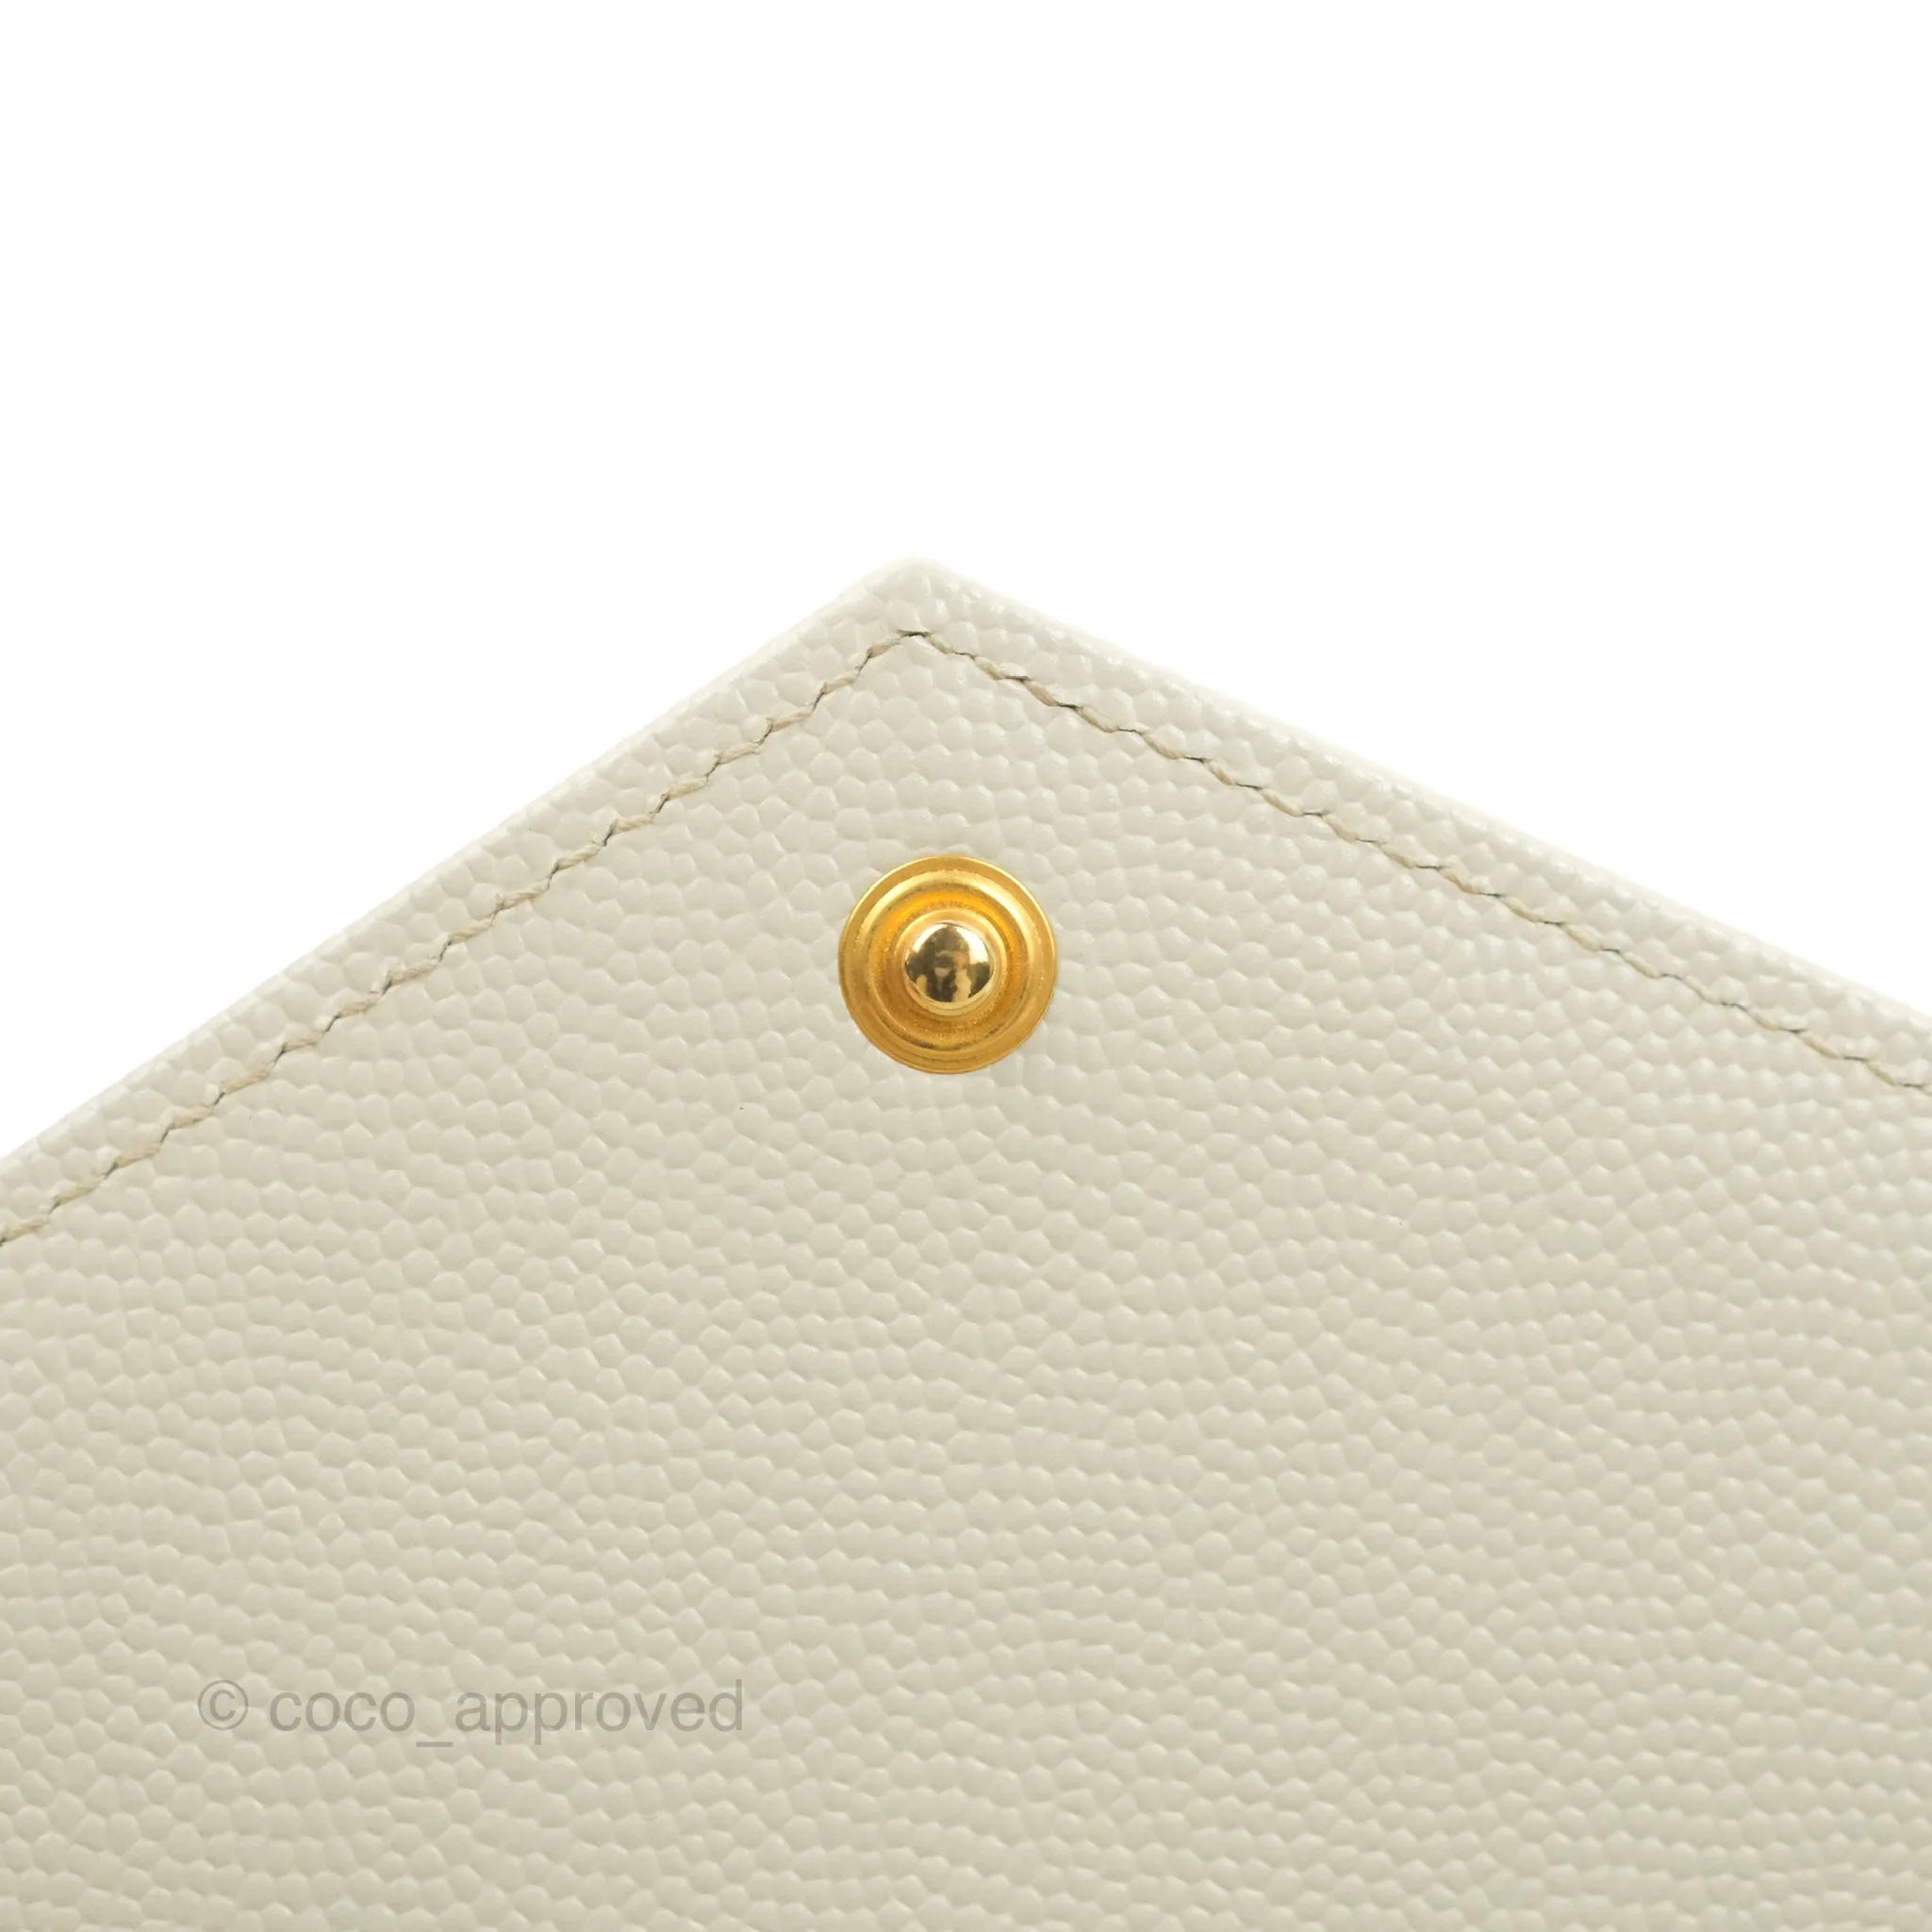 Saint Laurent Monogram Leather Card Case Crema Soft